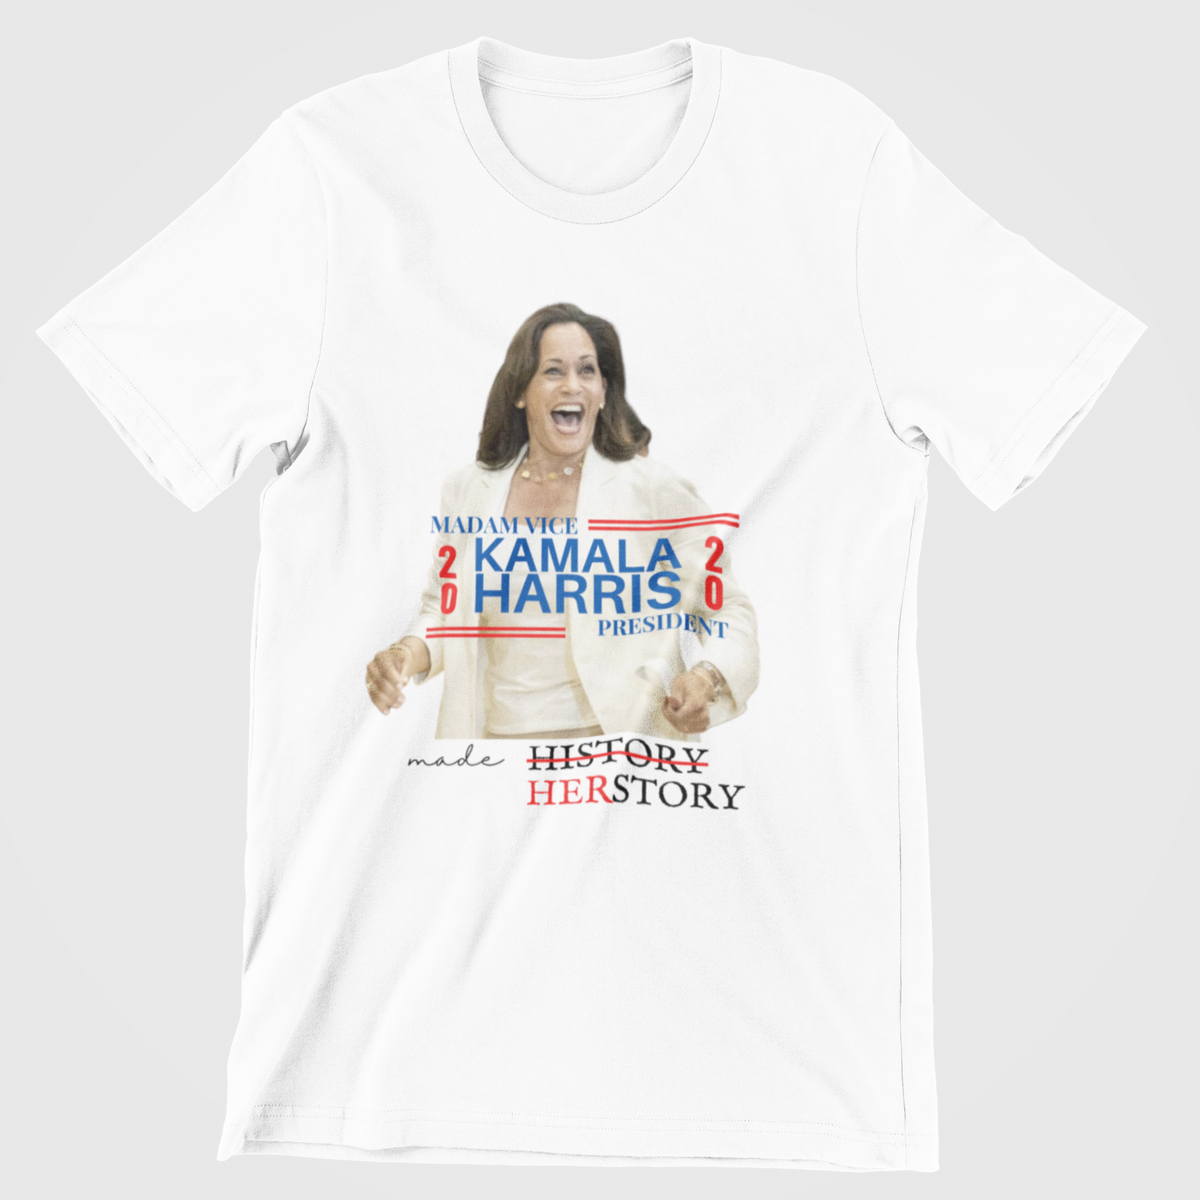 Madam Kamala Harris changed HIStory HERstory T-shirt to SensibleTees –